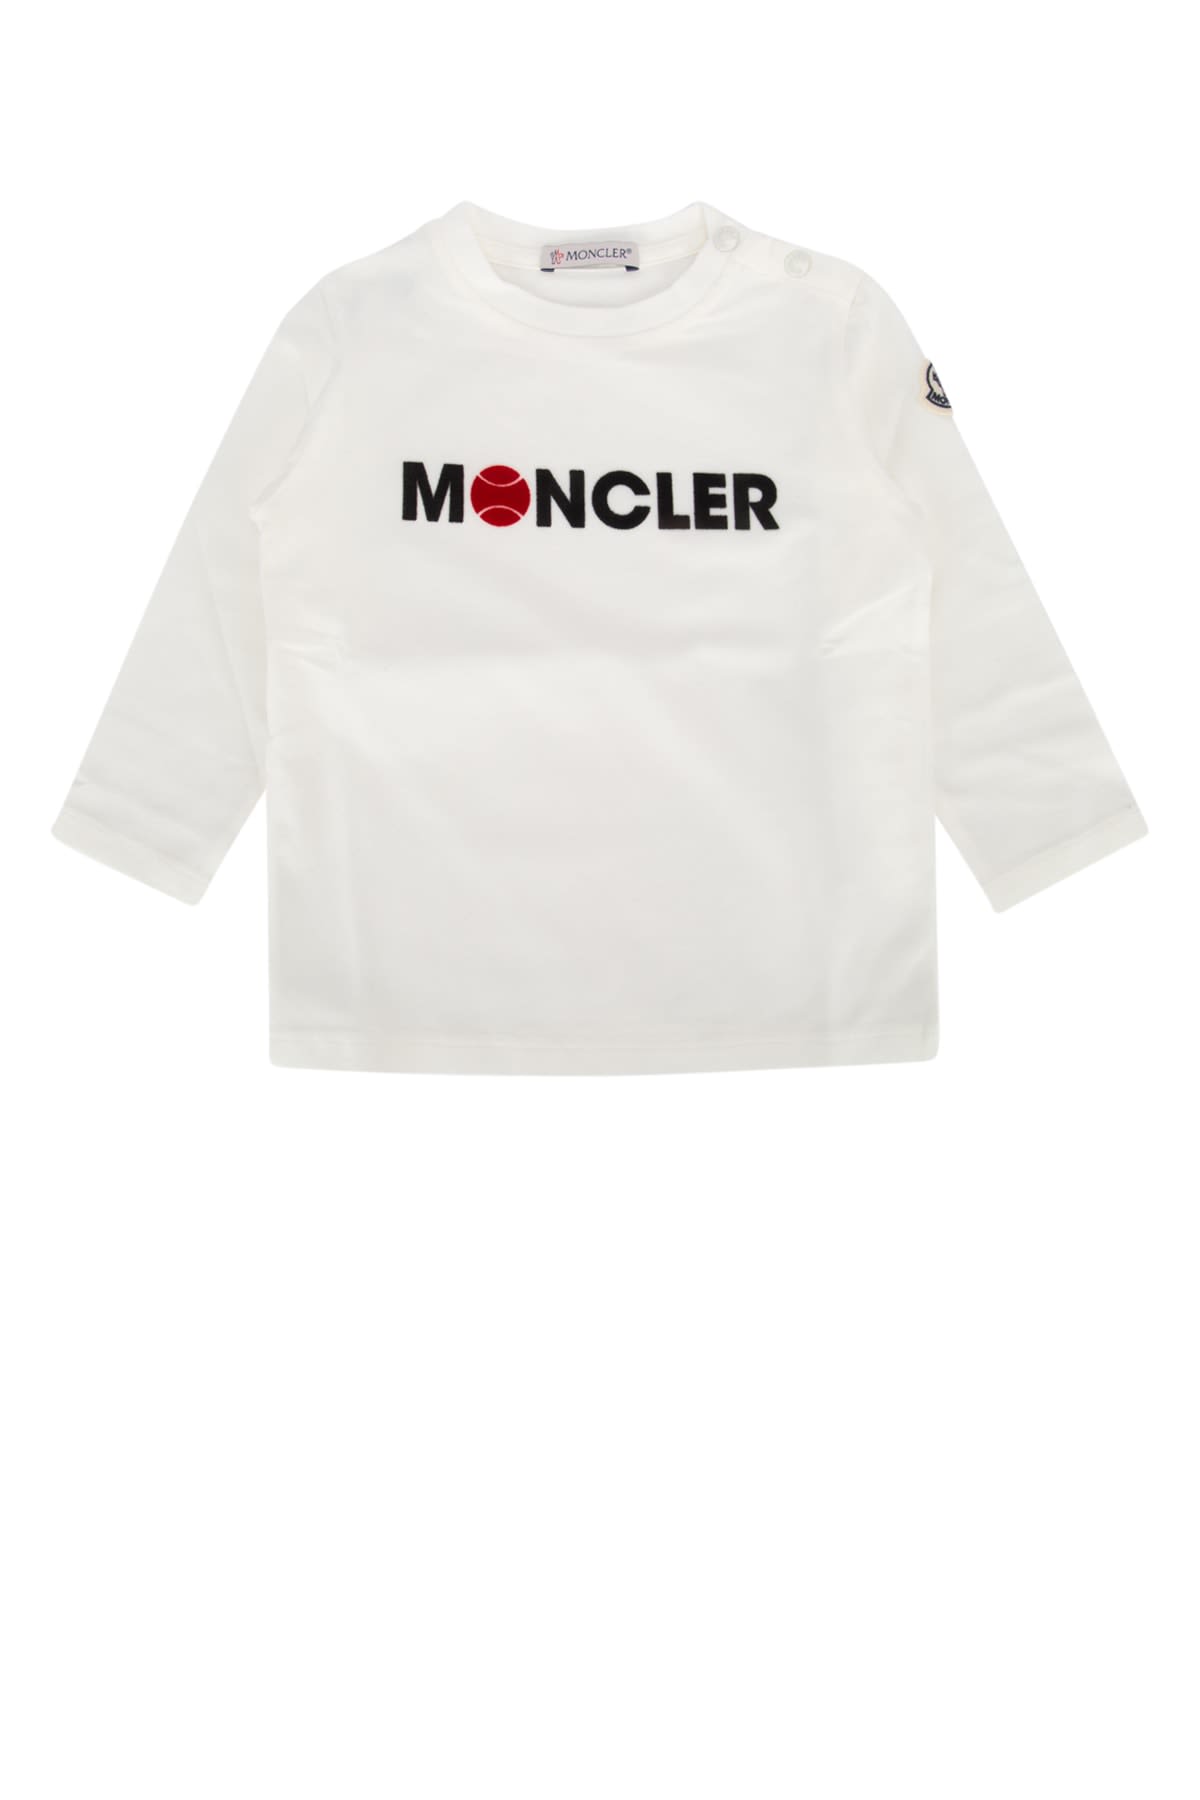 Moncler Ls T-shirt